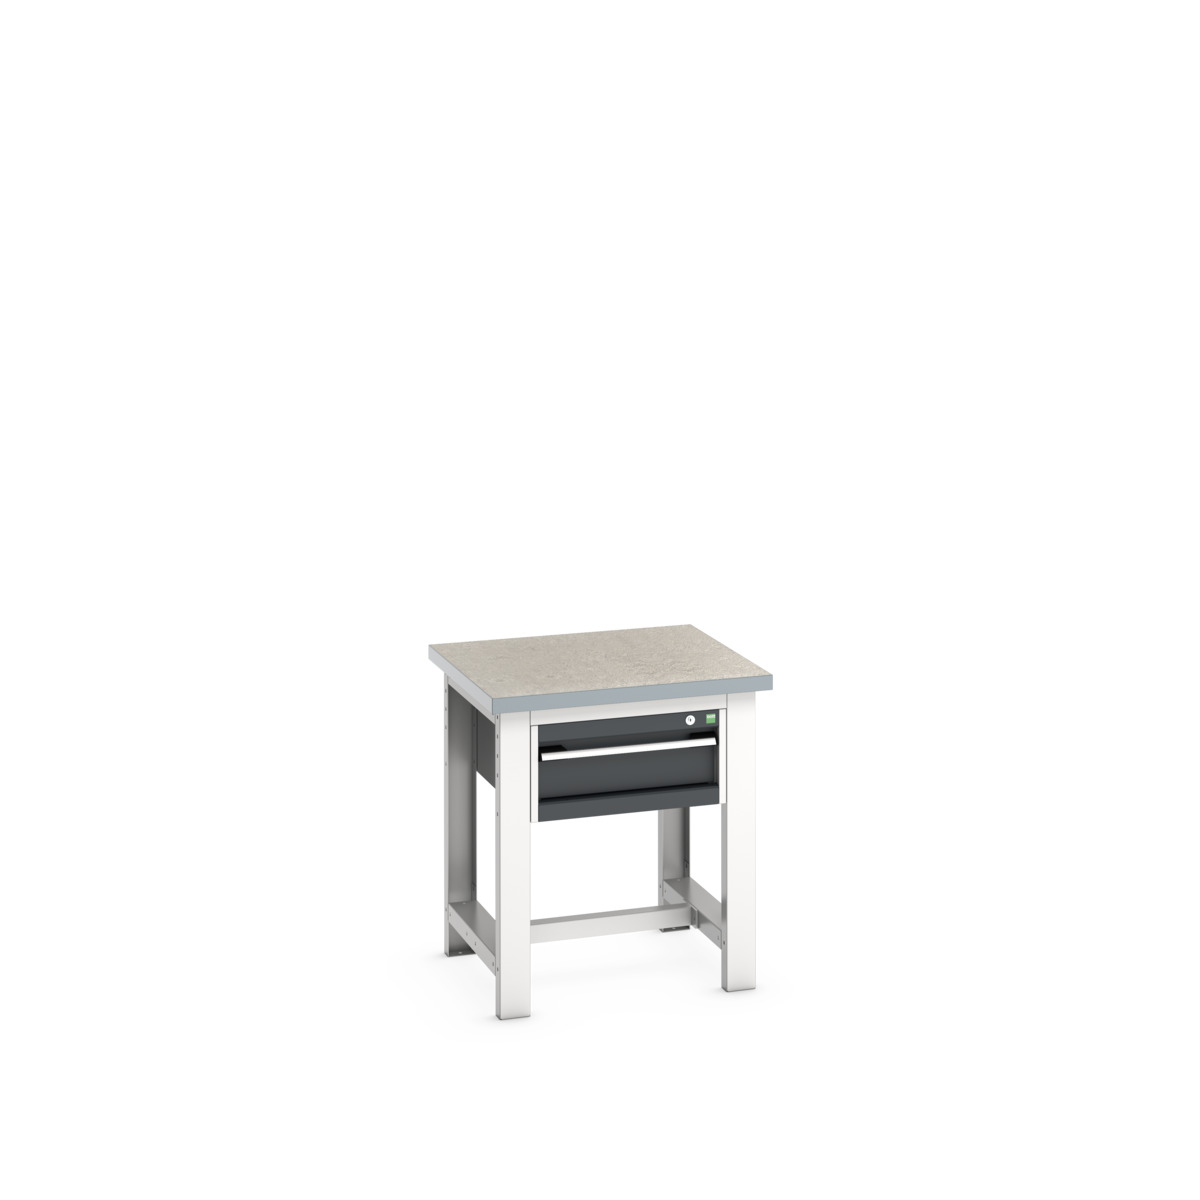 41003523. - cubio framework bench (lino)